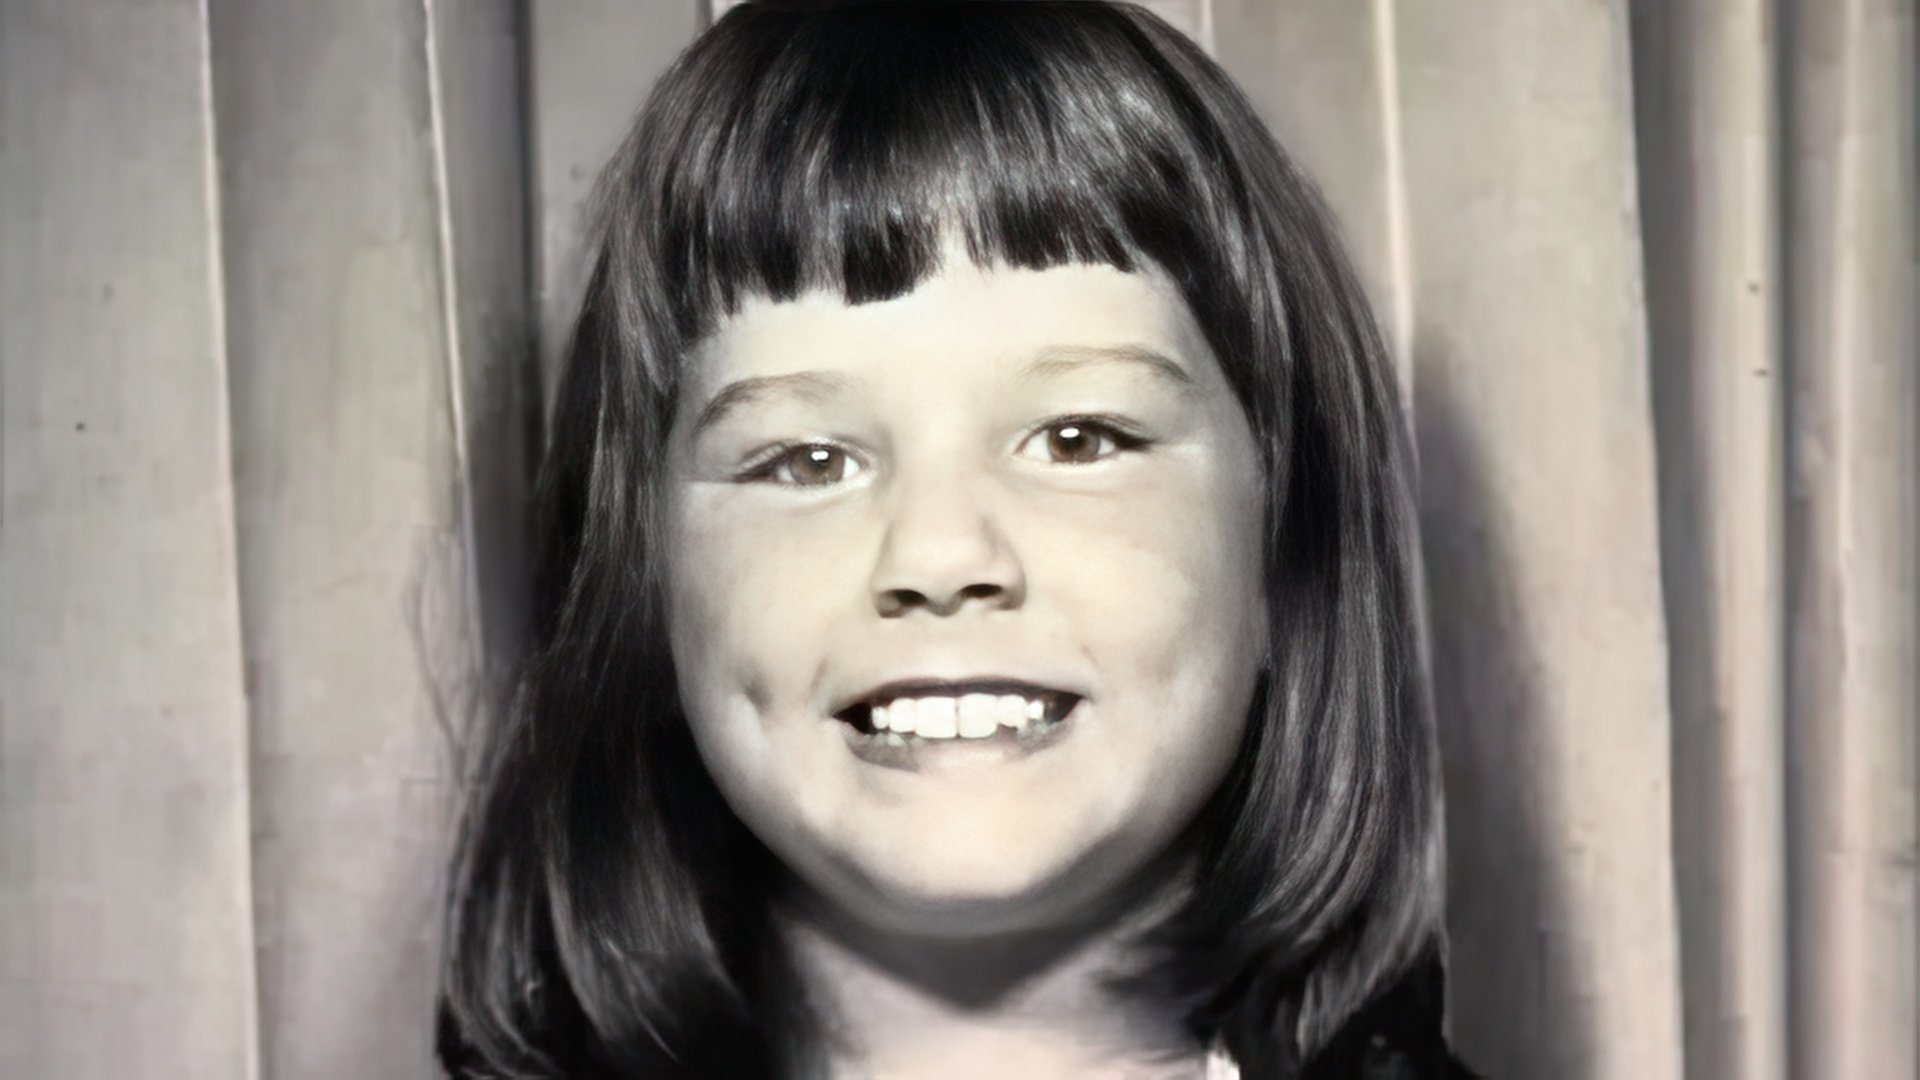 Melissa McCarthy in childhood